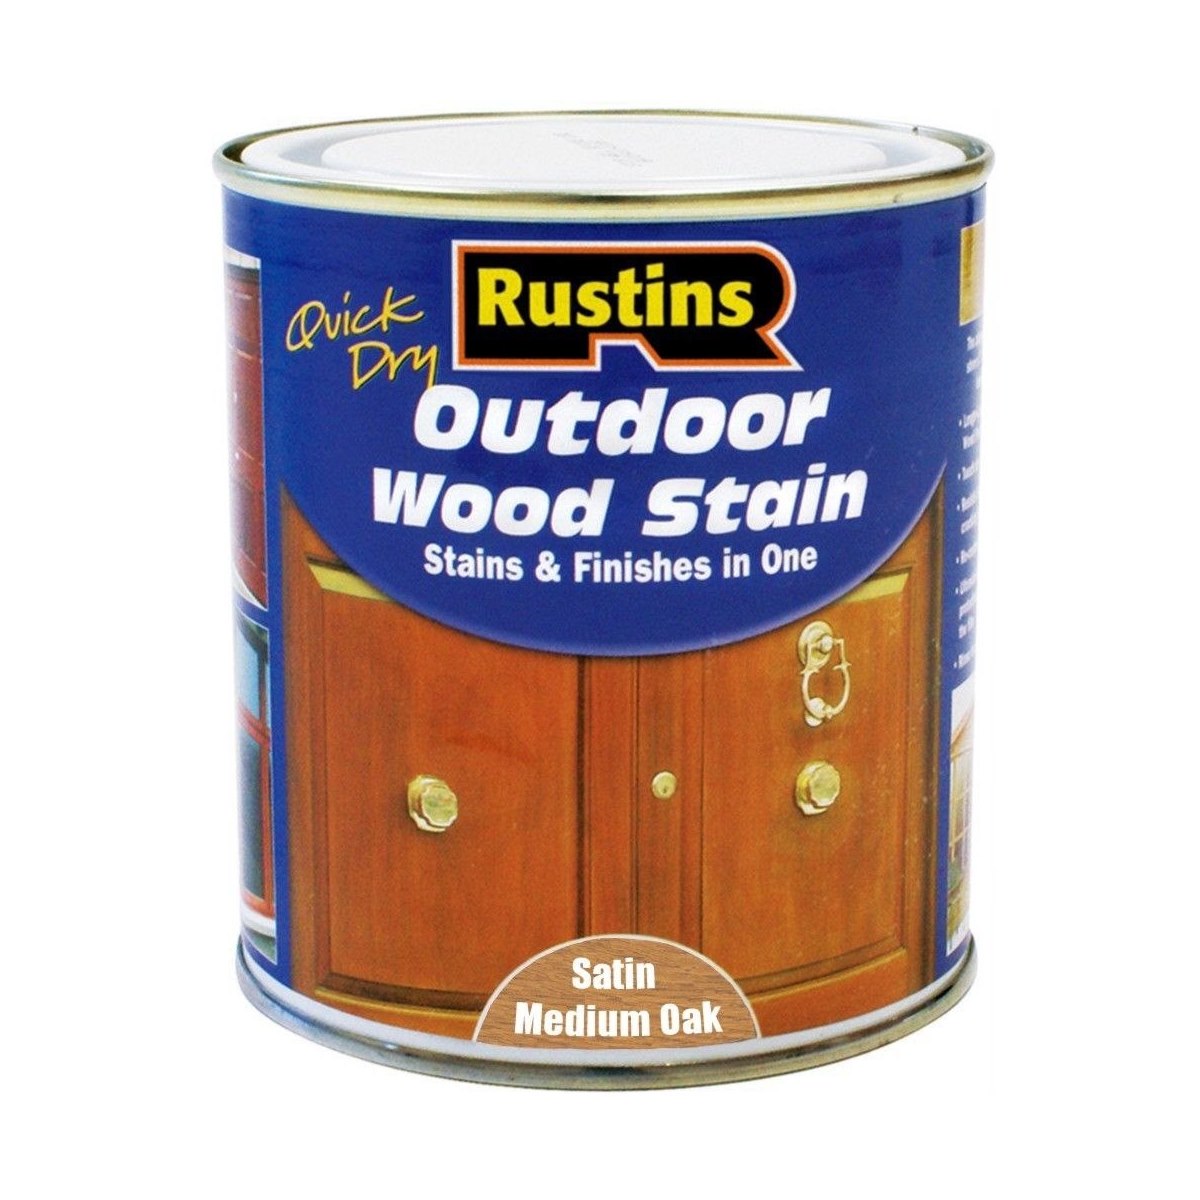 Rustins Quick Dry Outdoor Wood Stain Medium Oak 2.5 Litre